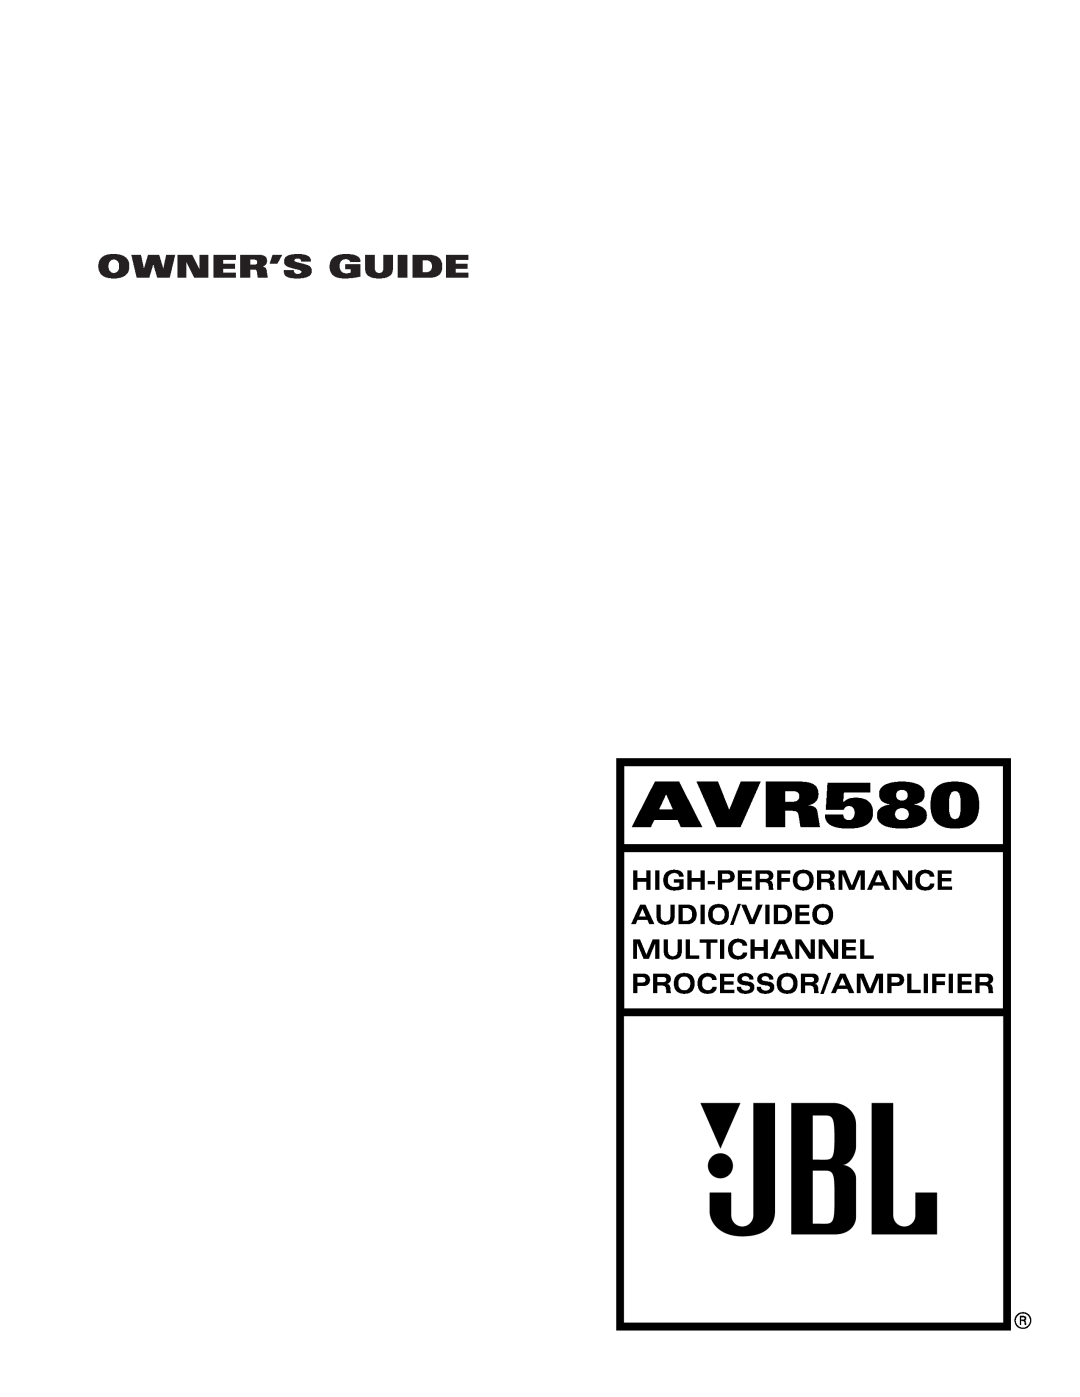 JBL AVR580 manual Owner’S Guide, High-Performance Audio/Video Multichannel, Processor/Amplifier 